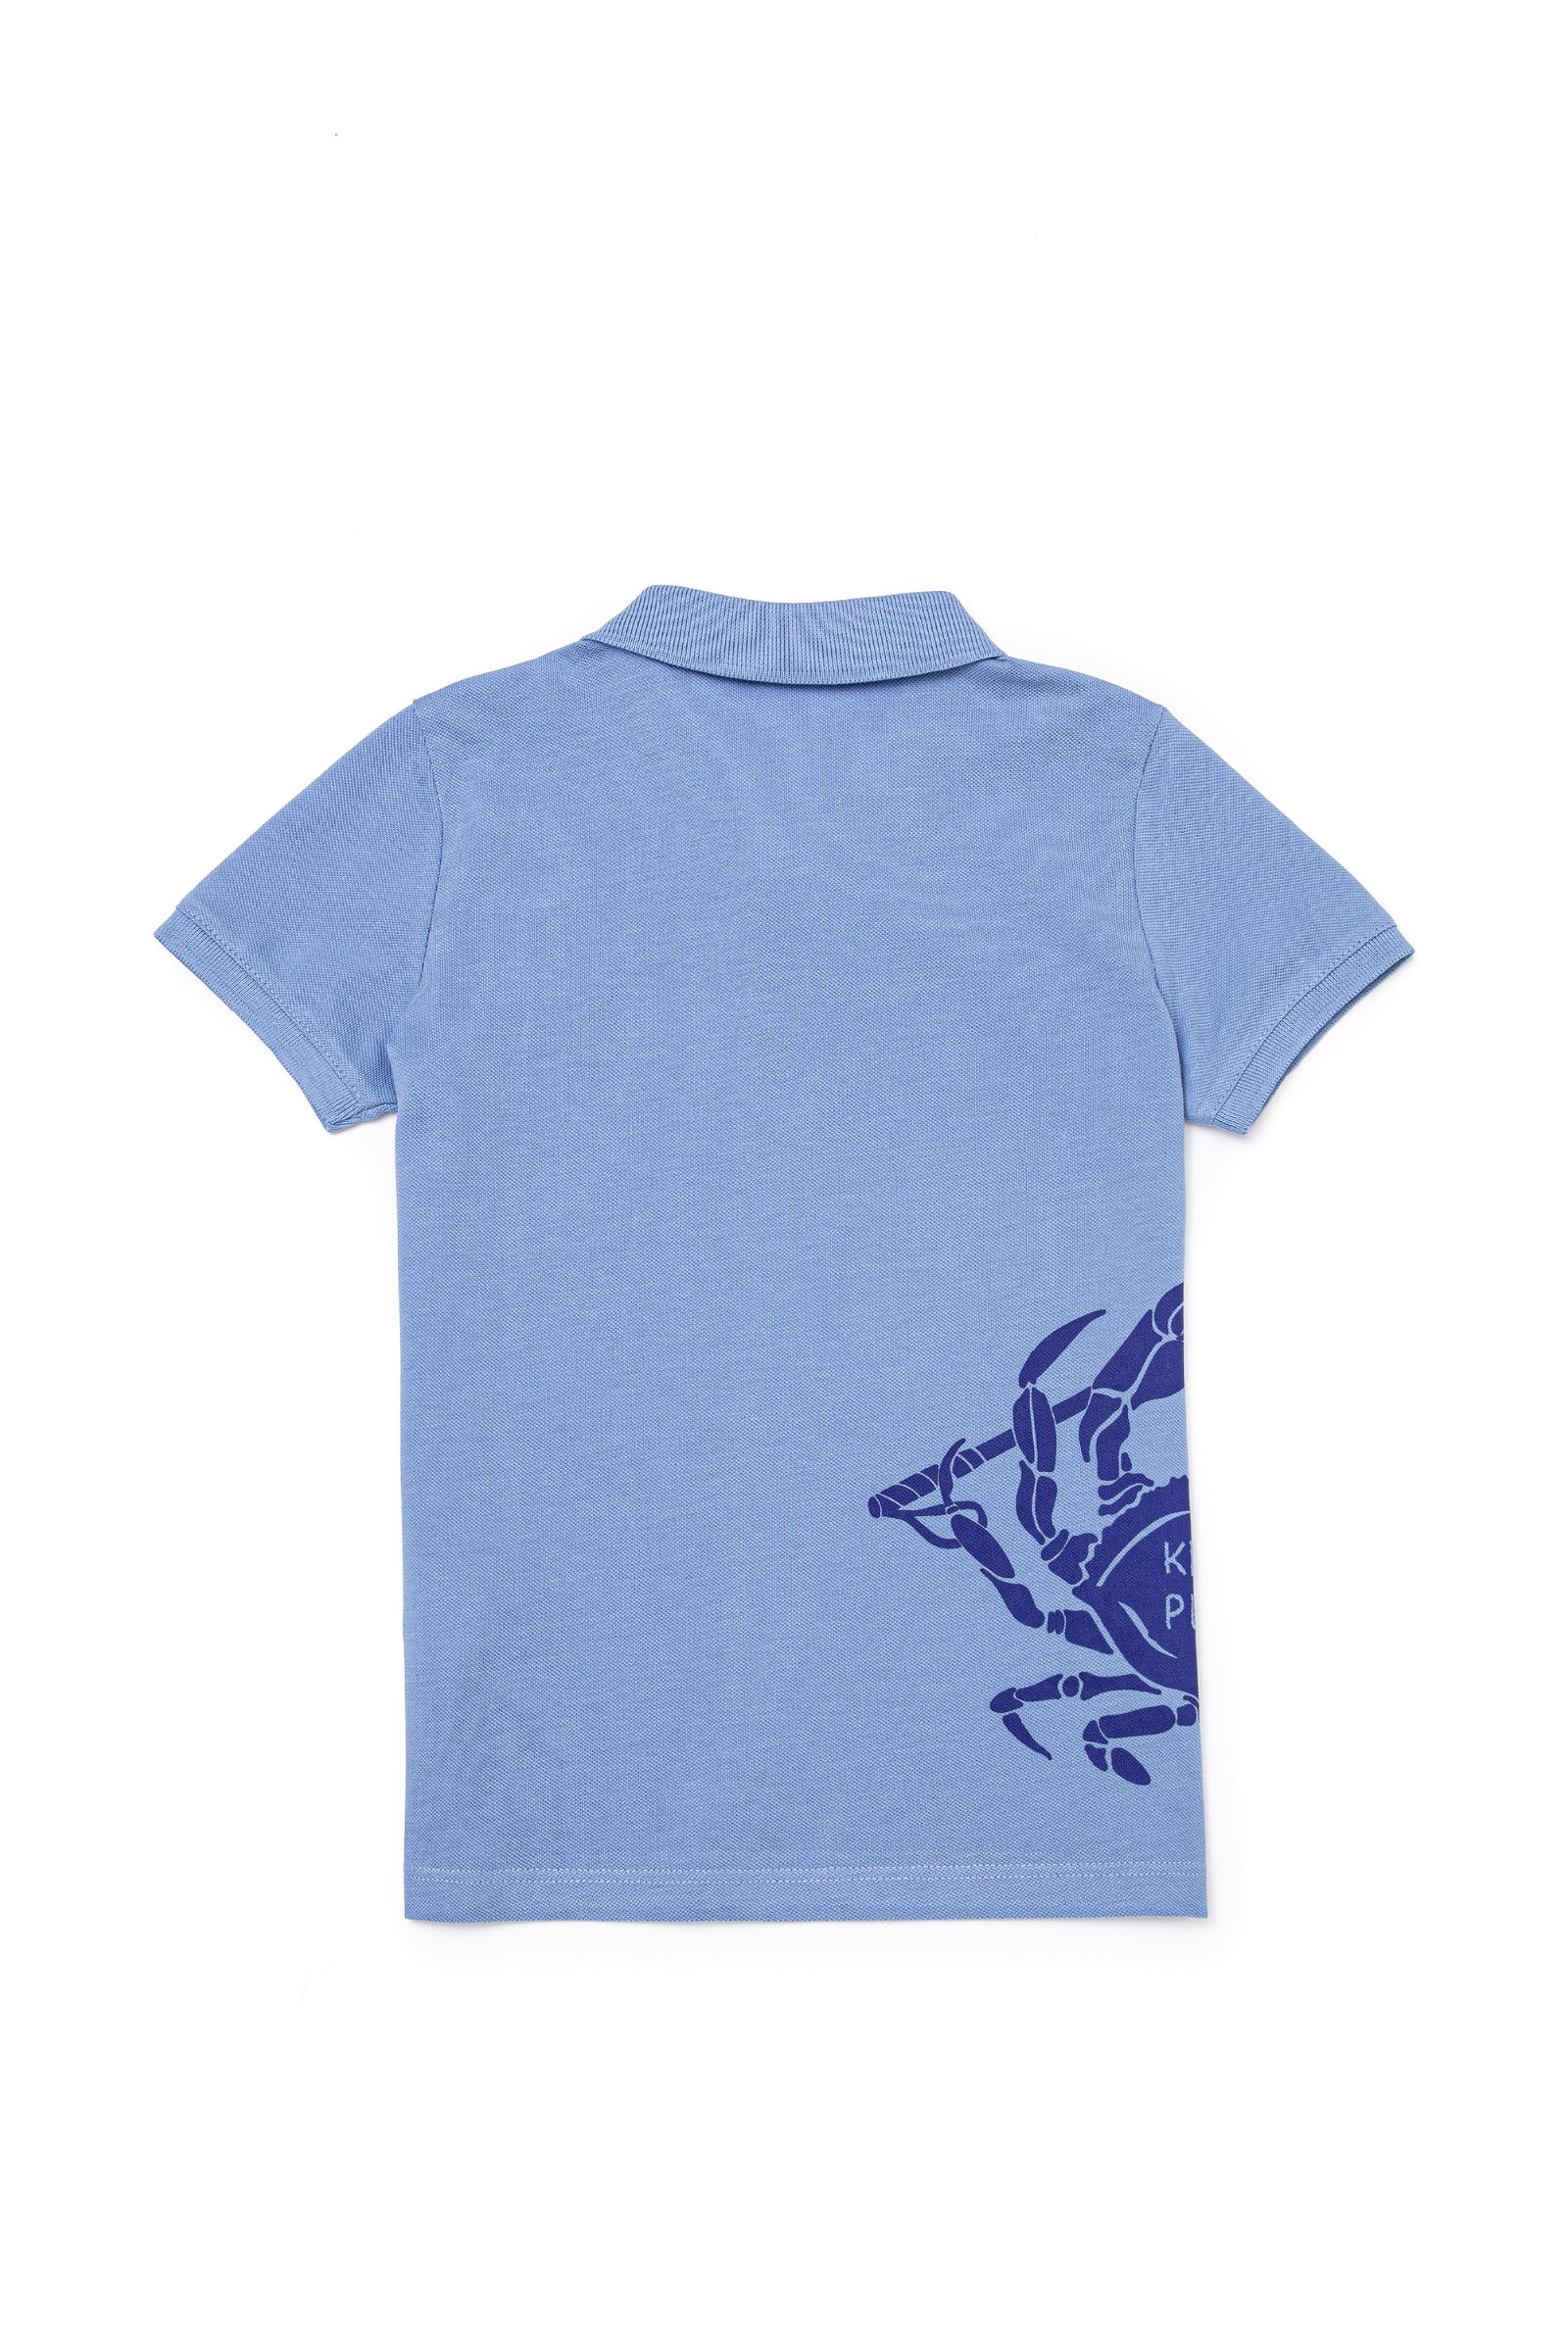 تی شرت یقه پولو آبی تیره  استاندارد فیت آستین کوتاه پسرانه یو اس پولو | US POLO ASSN